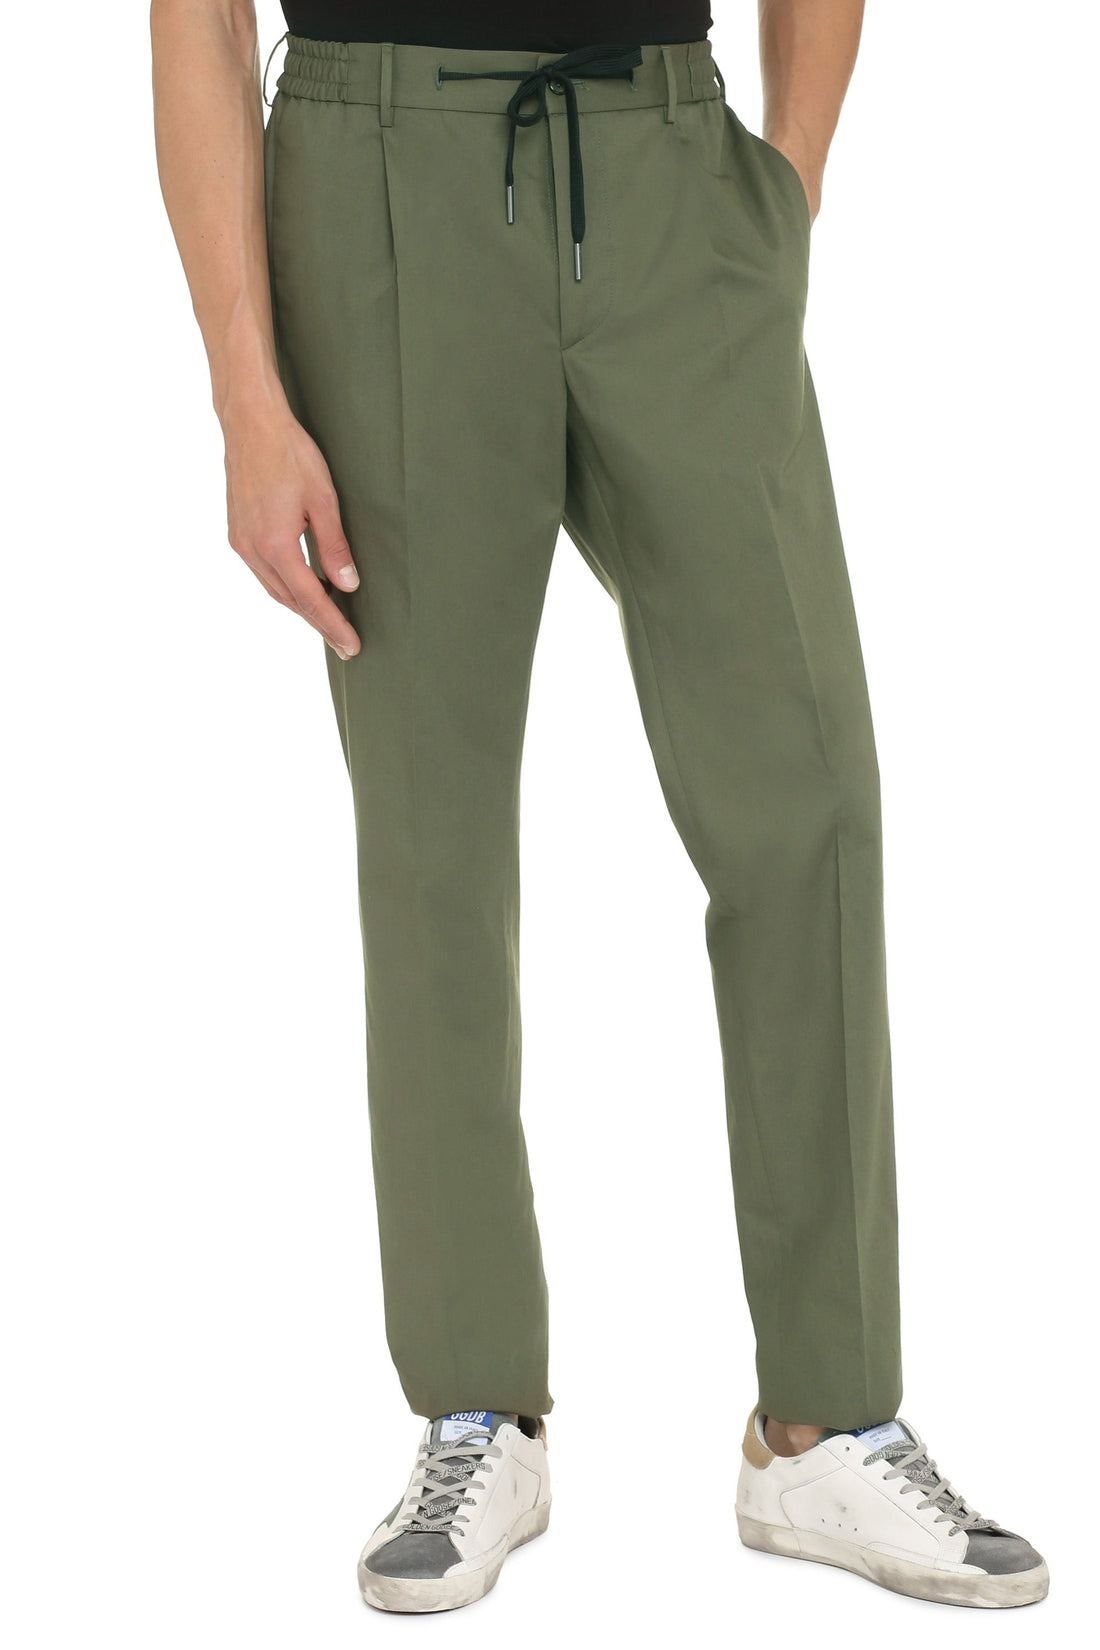 Tagliatore-OUTLET-SALE-Stretch cotton chino trousers-ARCHIVIST